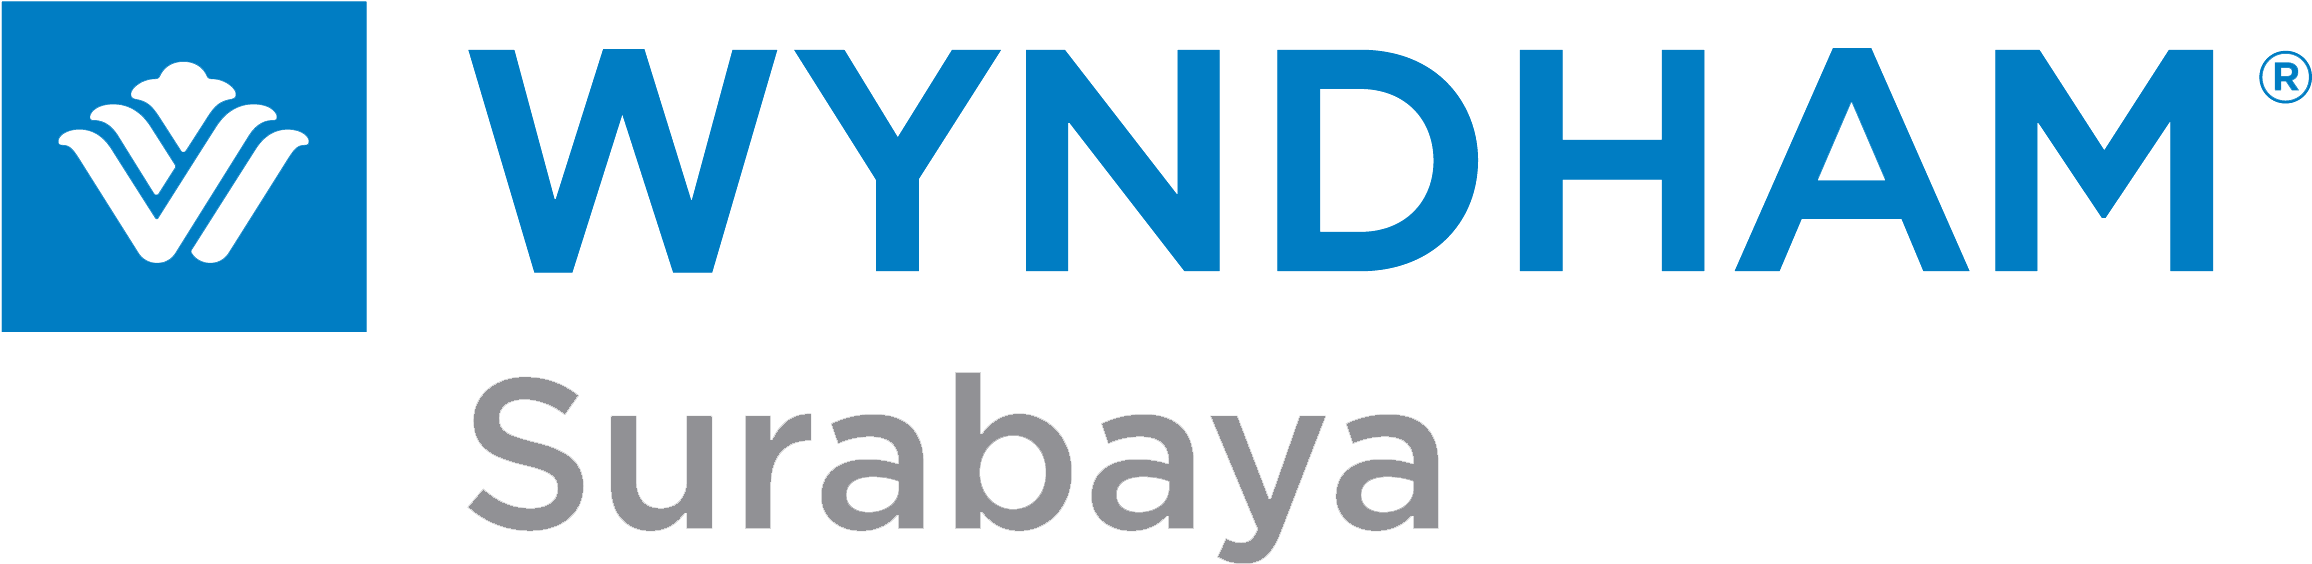 Wyndham Surabaya - Wyndham Surabaya Logo Clipart (2500x703), Png Download